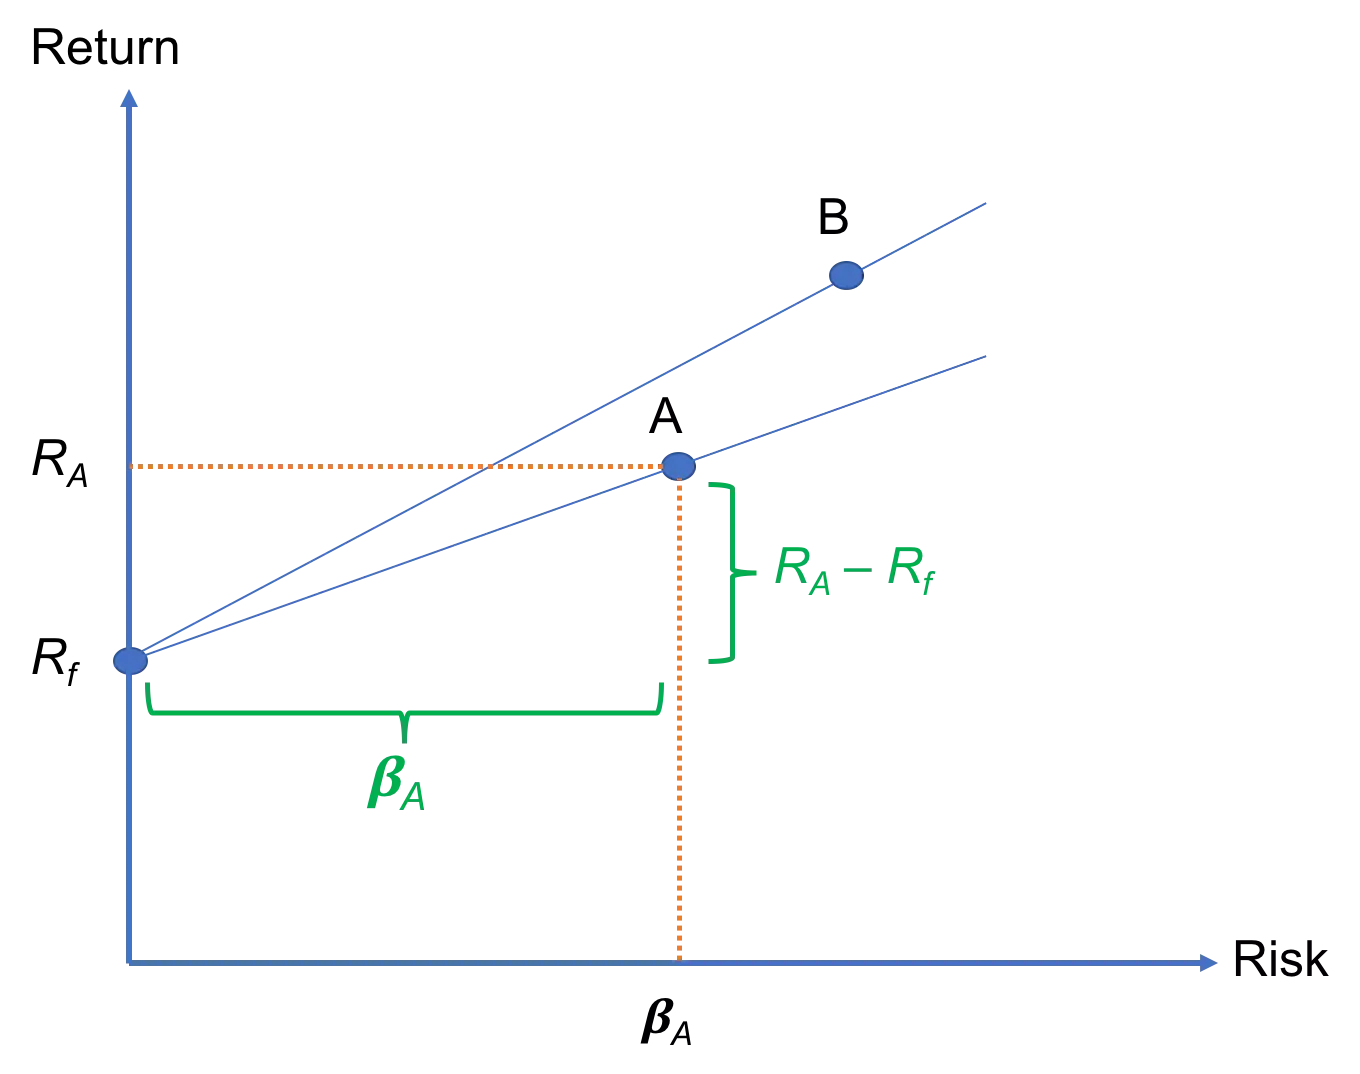 Treynor ratio formula and calculator